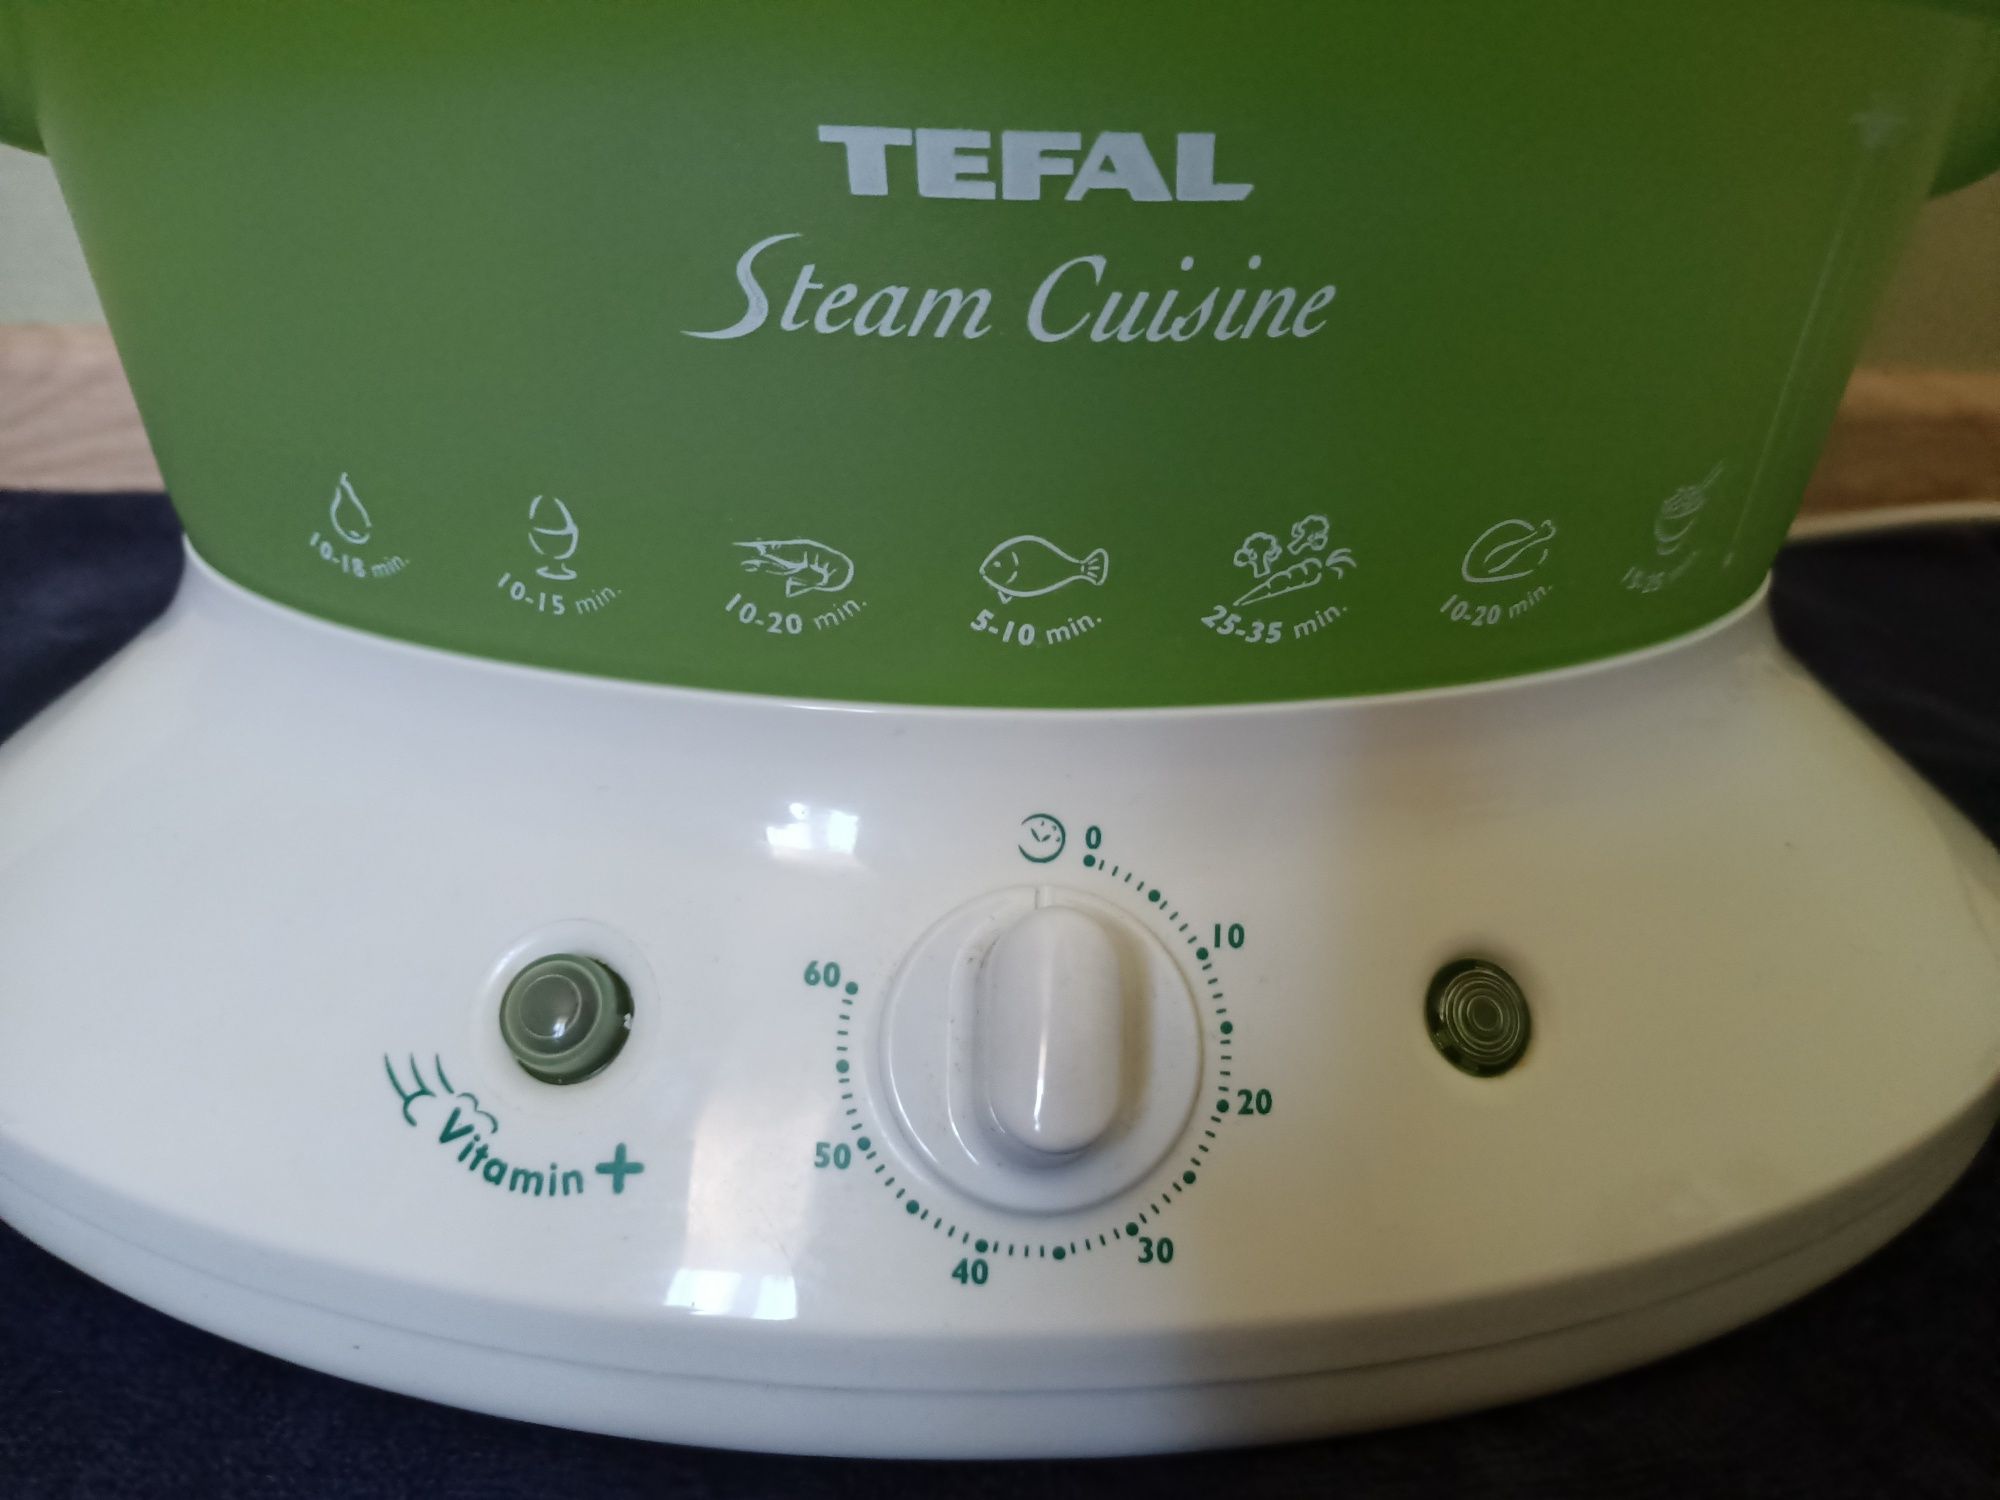 Пароварка Tefal Steam Cuisine Vitamin+